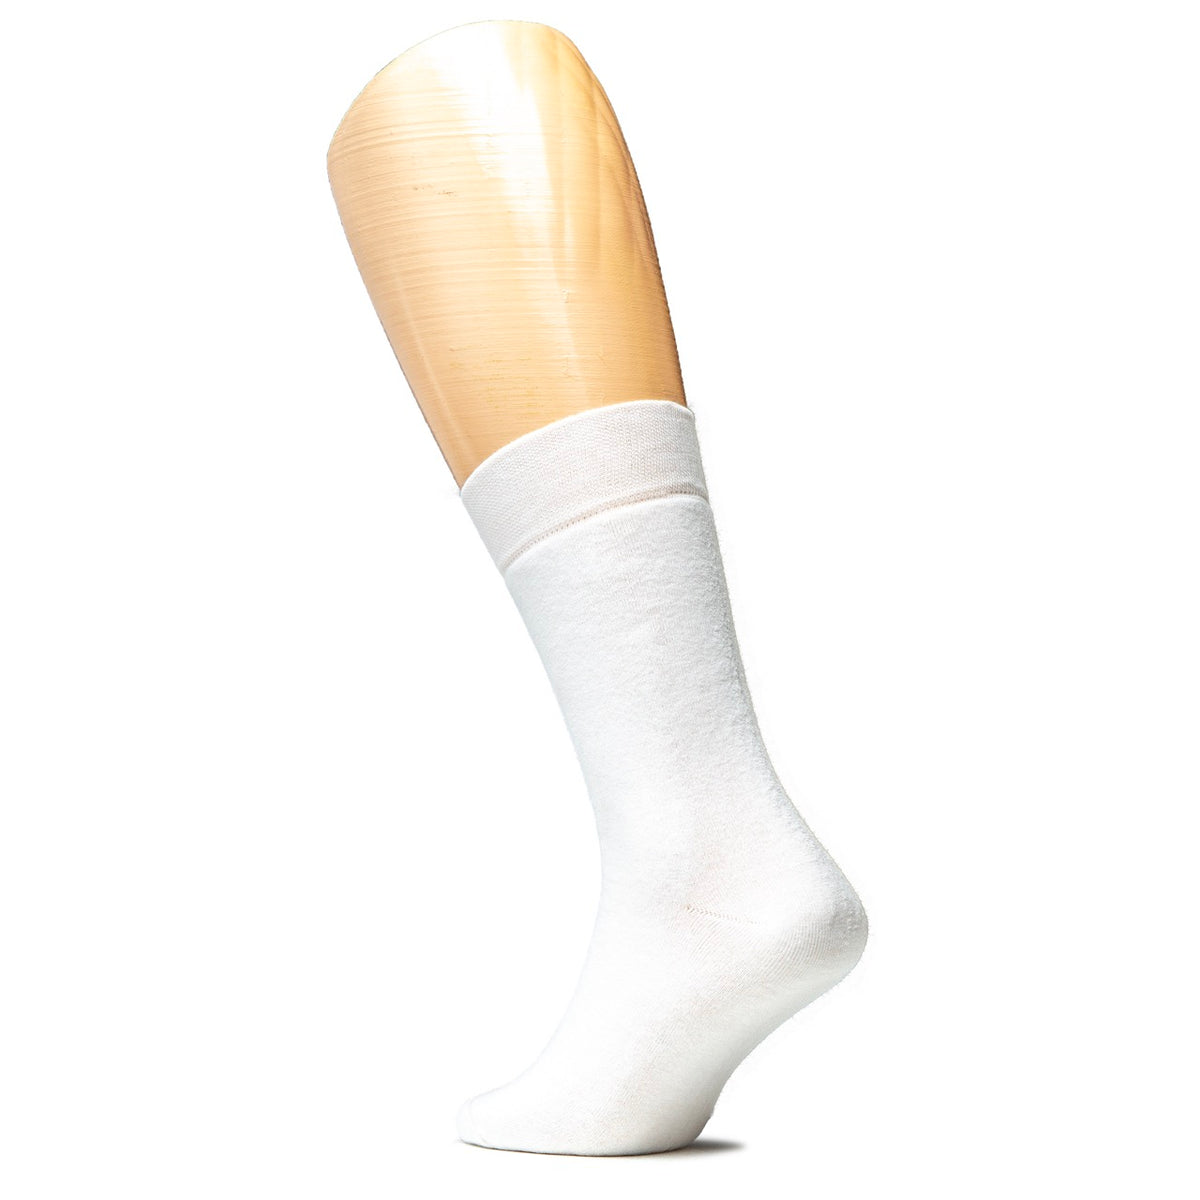 Men's Cotton Full Cushion Ankle Socks, 3 Pairs